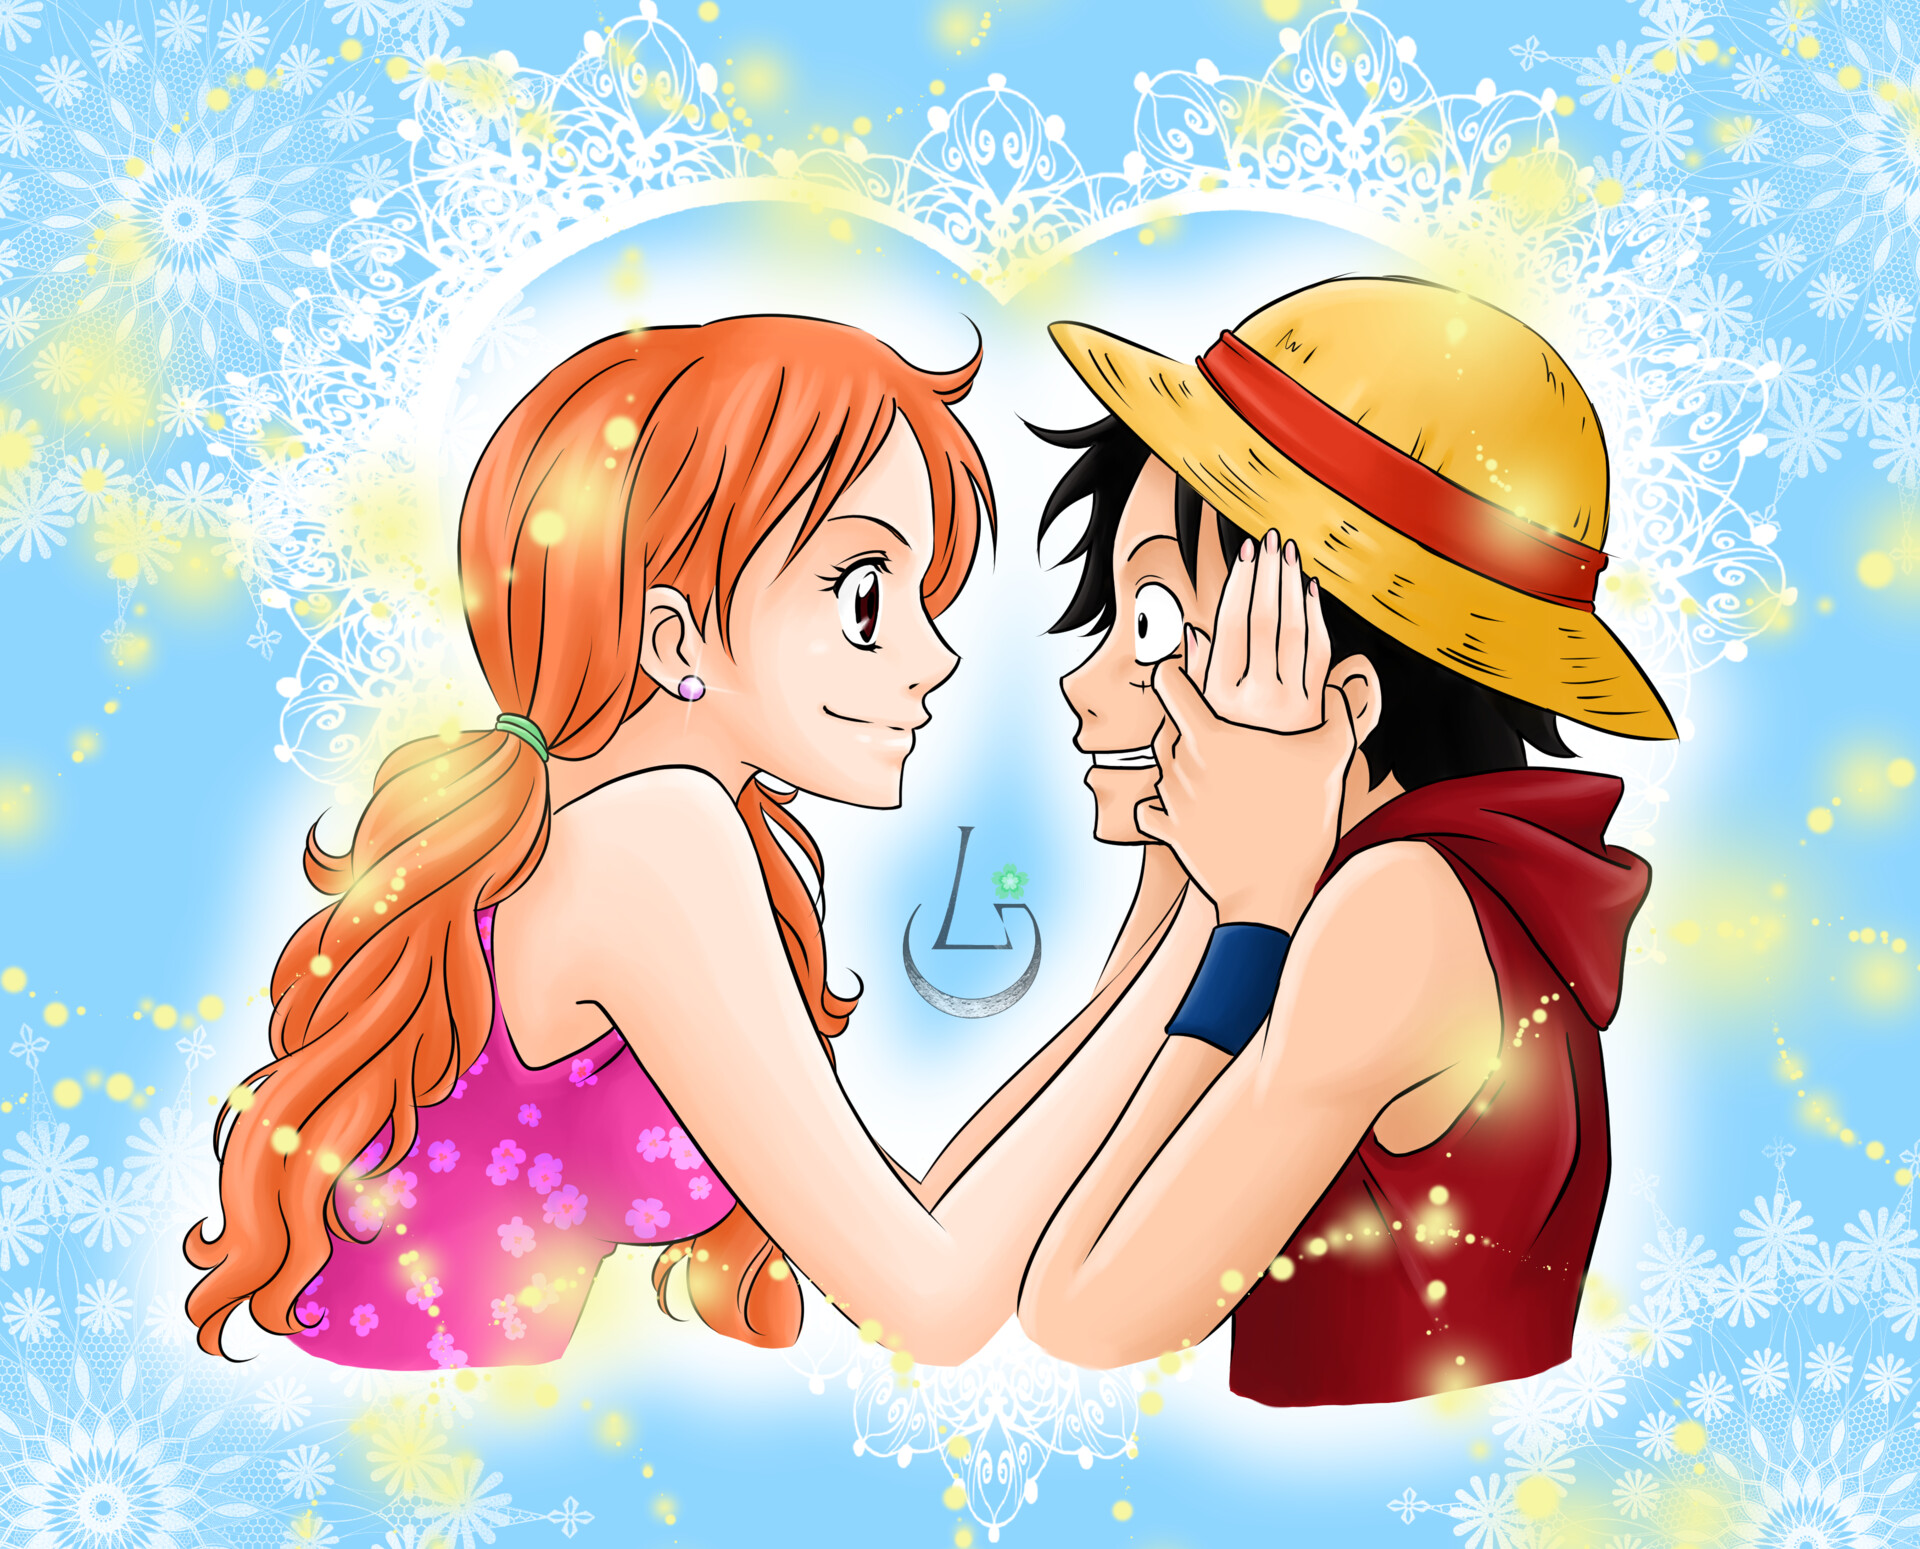 ArtStation - Nami (One Piece)